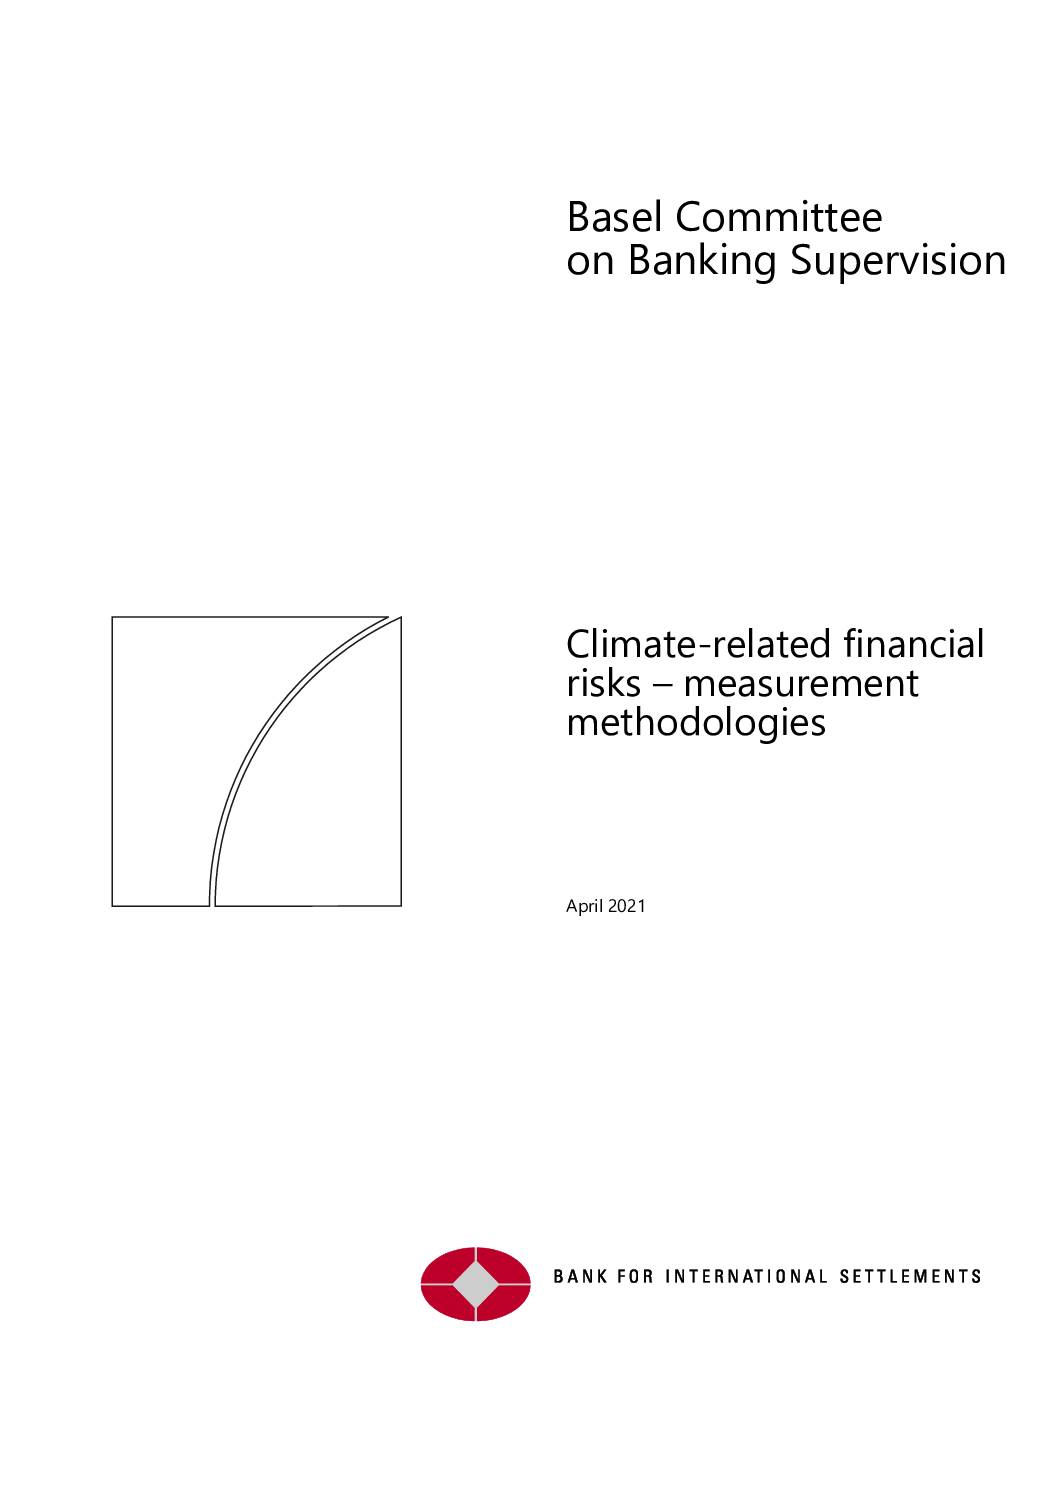 Climate-Related Financial Risks: Measurement Methodologies